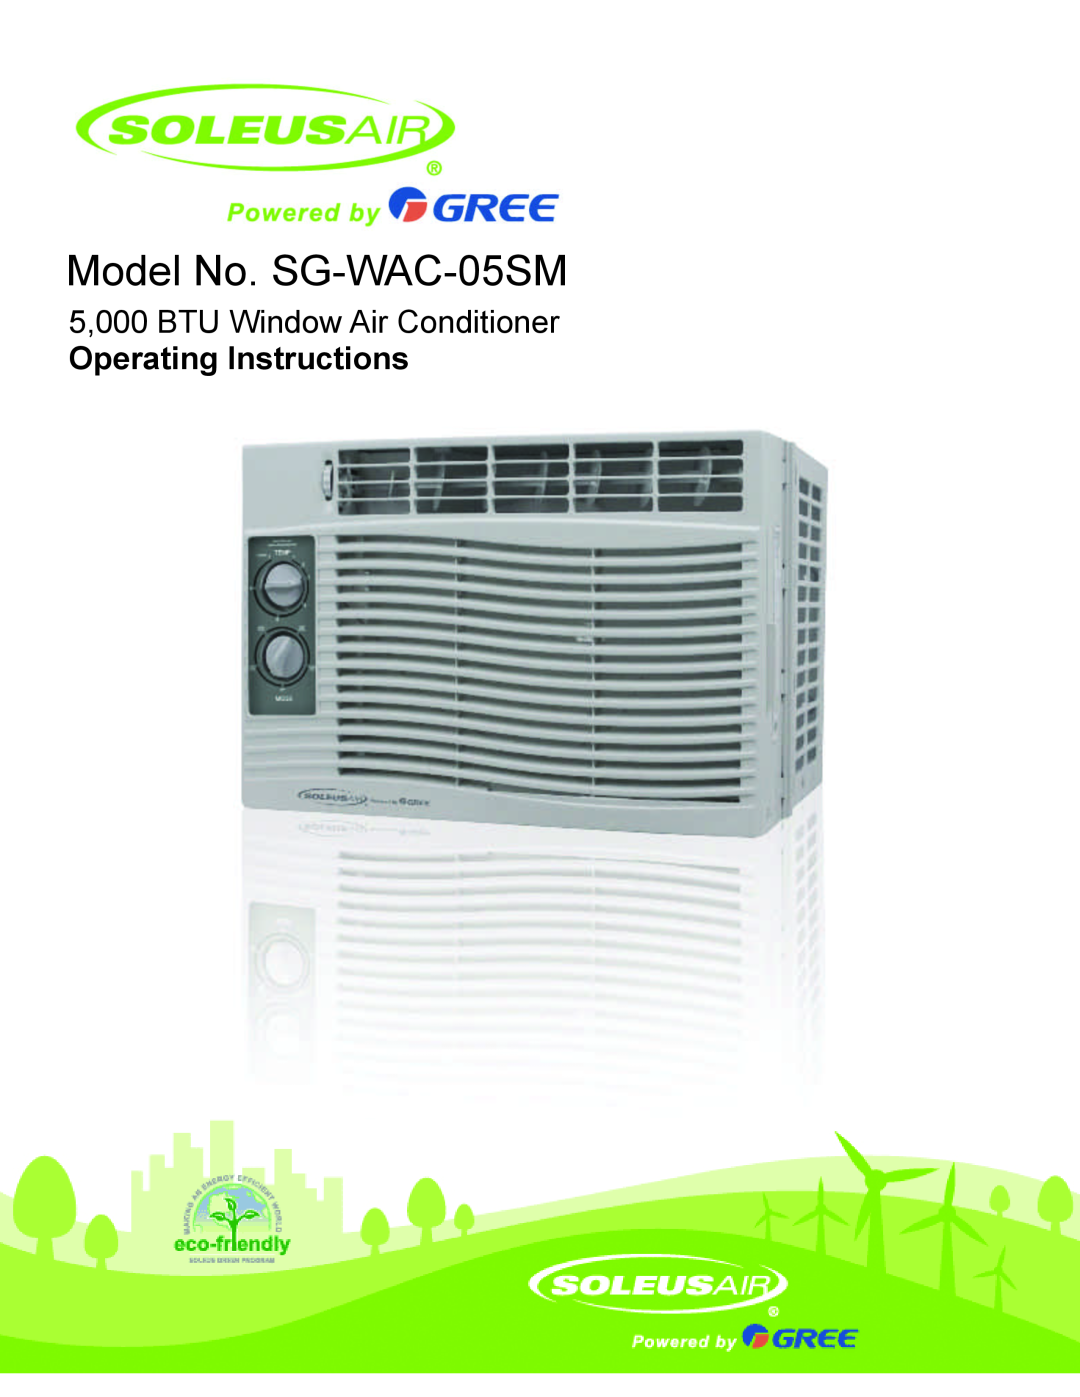 Soleus Air operating instructions Model No. SG-WAC-05SM, 5,000 BTU Window Air Conditioner, Operating Instructions 